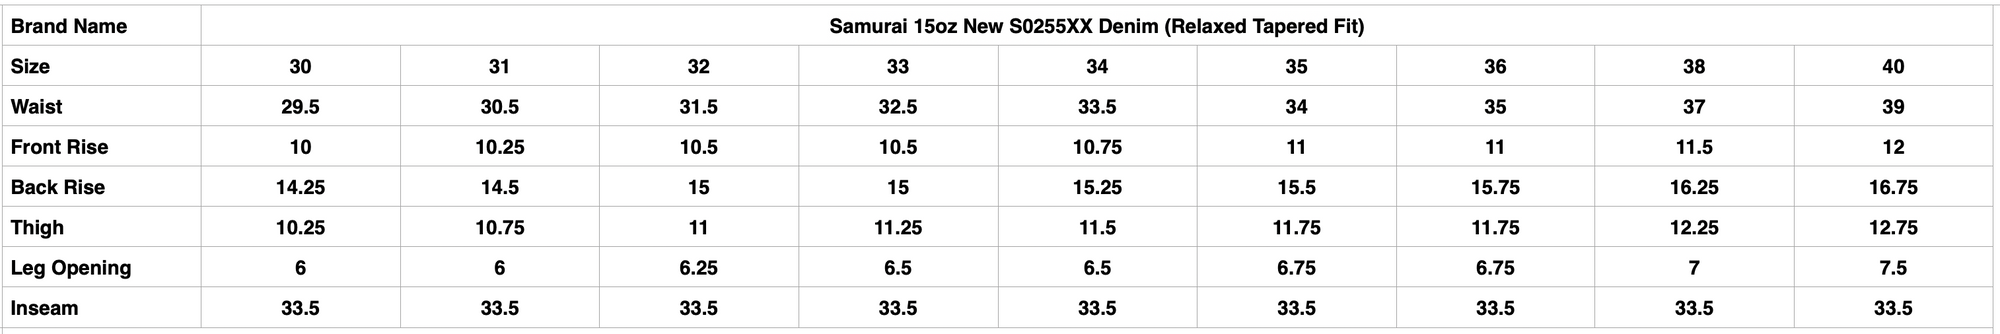 Samurai 15oz New S0255XX Denim (Relaxed Tapered Fit)